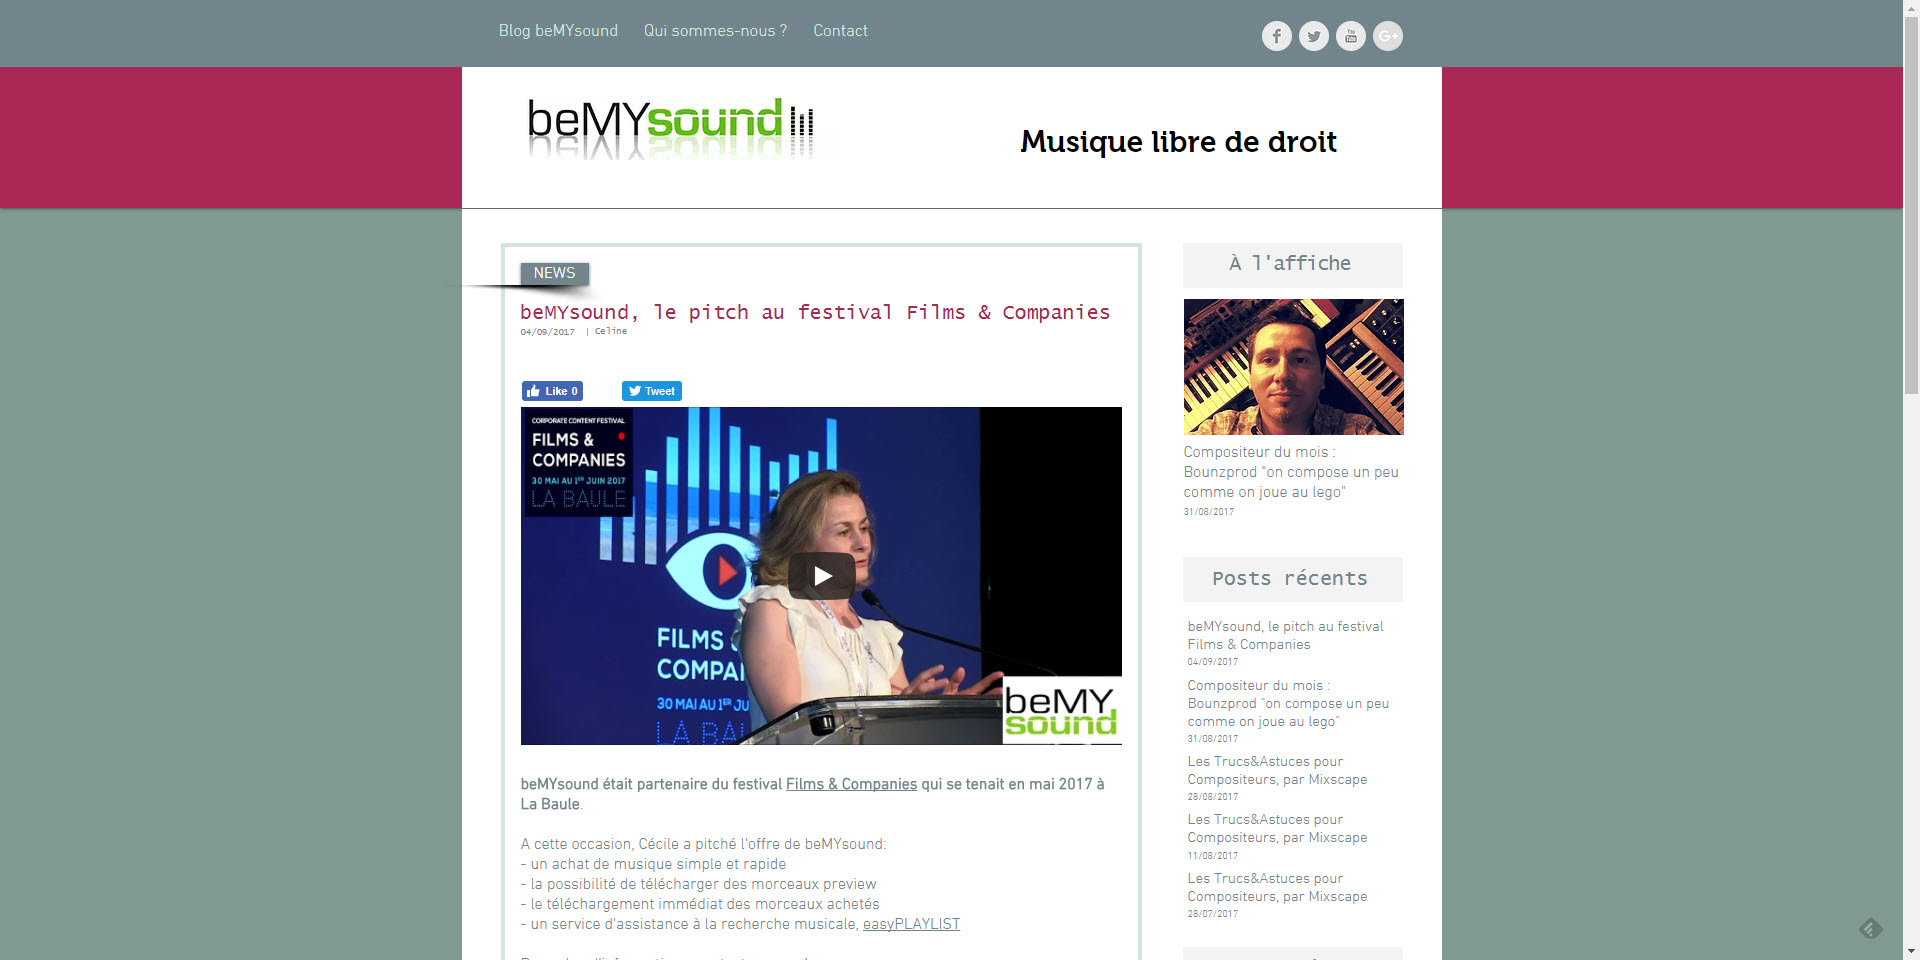 beMYsound, son pitch au festival Films & Companies